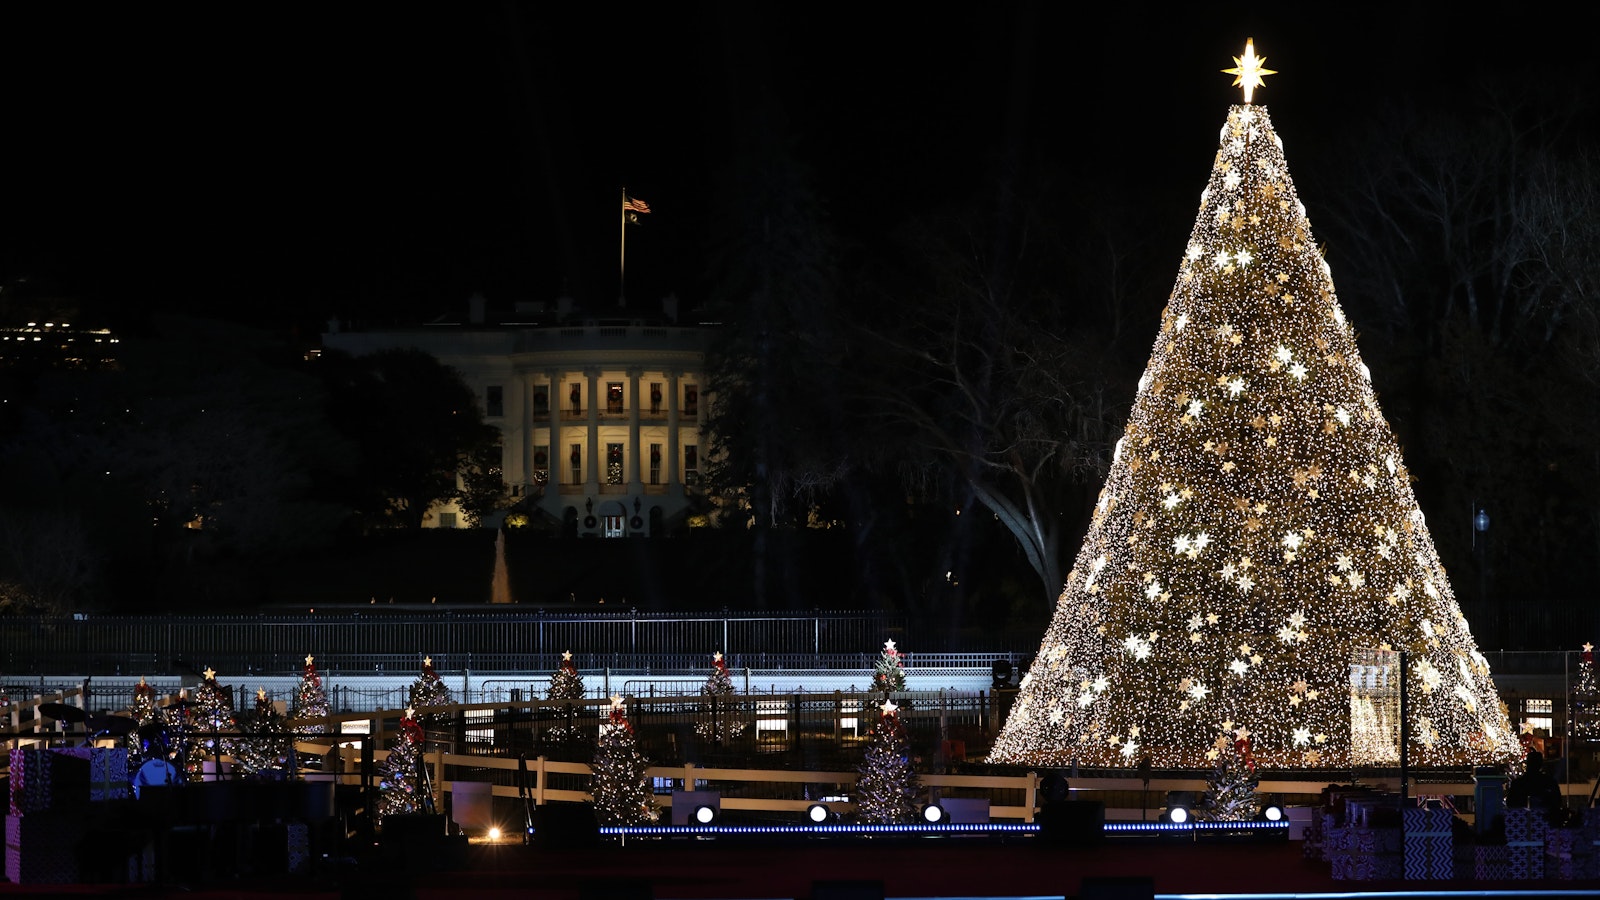 2019 National Christmas Tree, illuminated